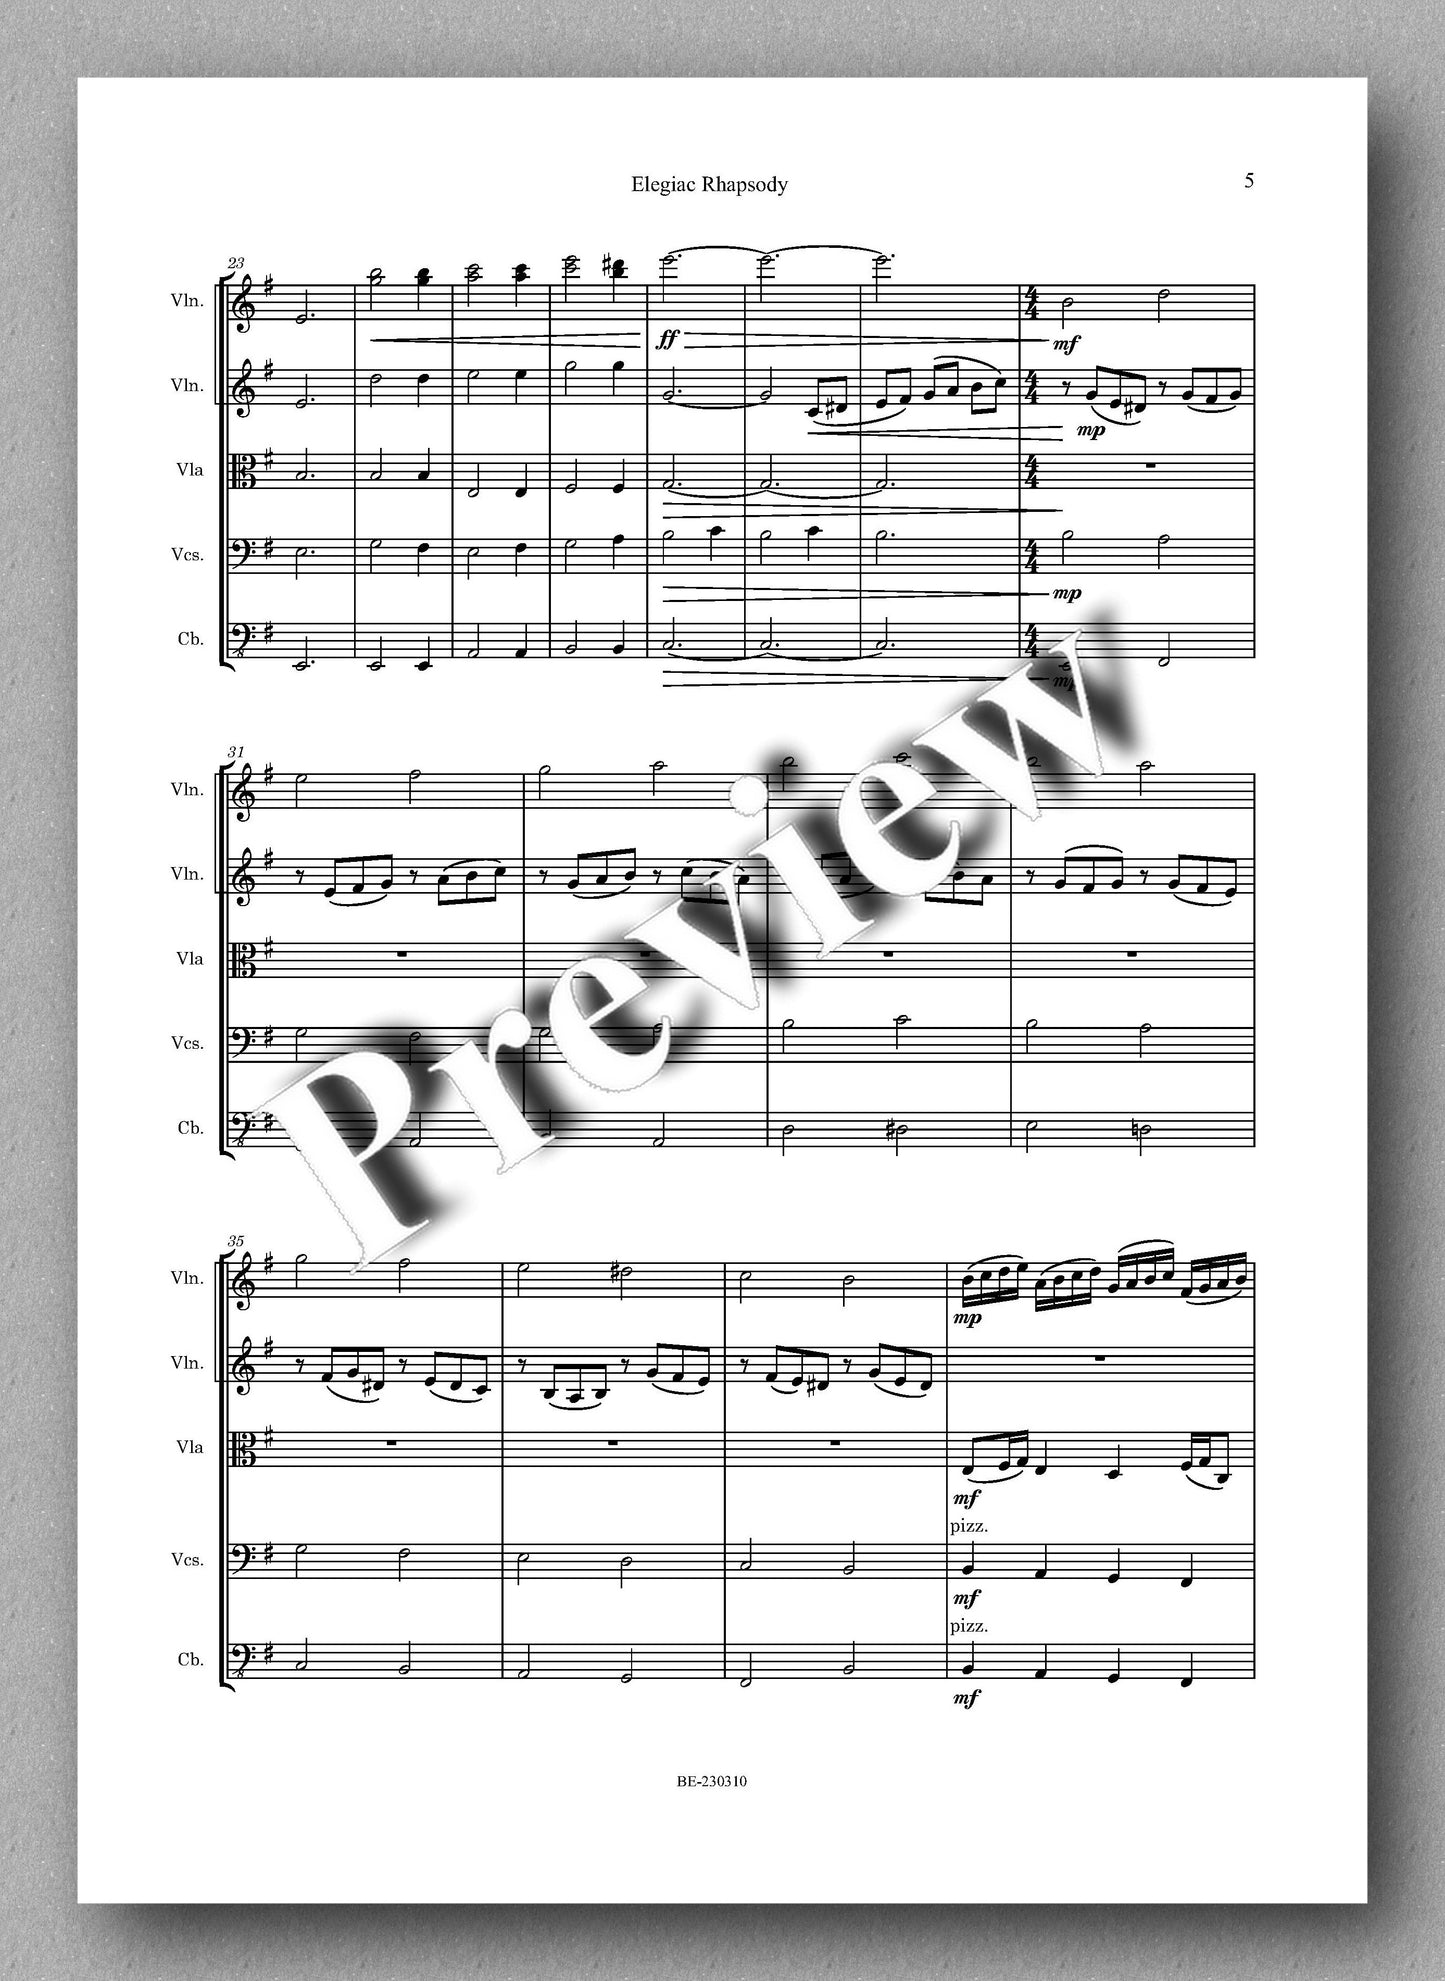 Filip Alilovic, Elegiac Rhapsody - preview of the music score 2